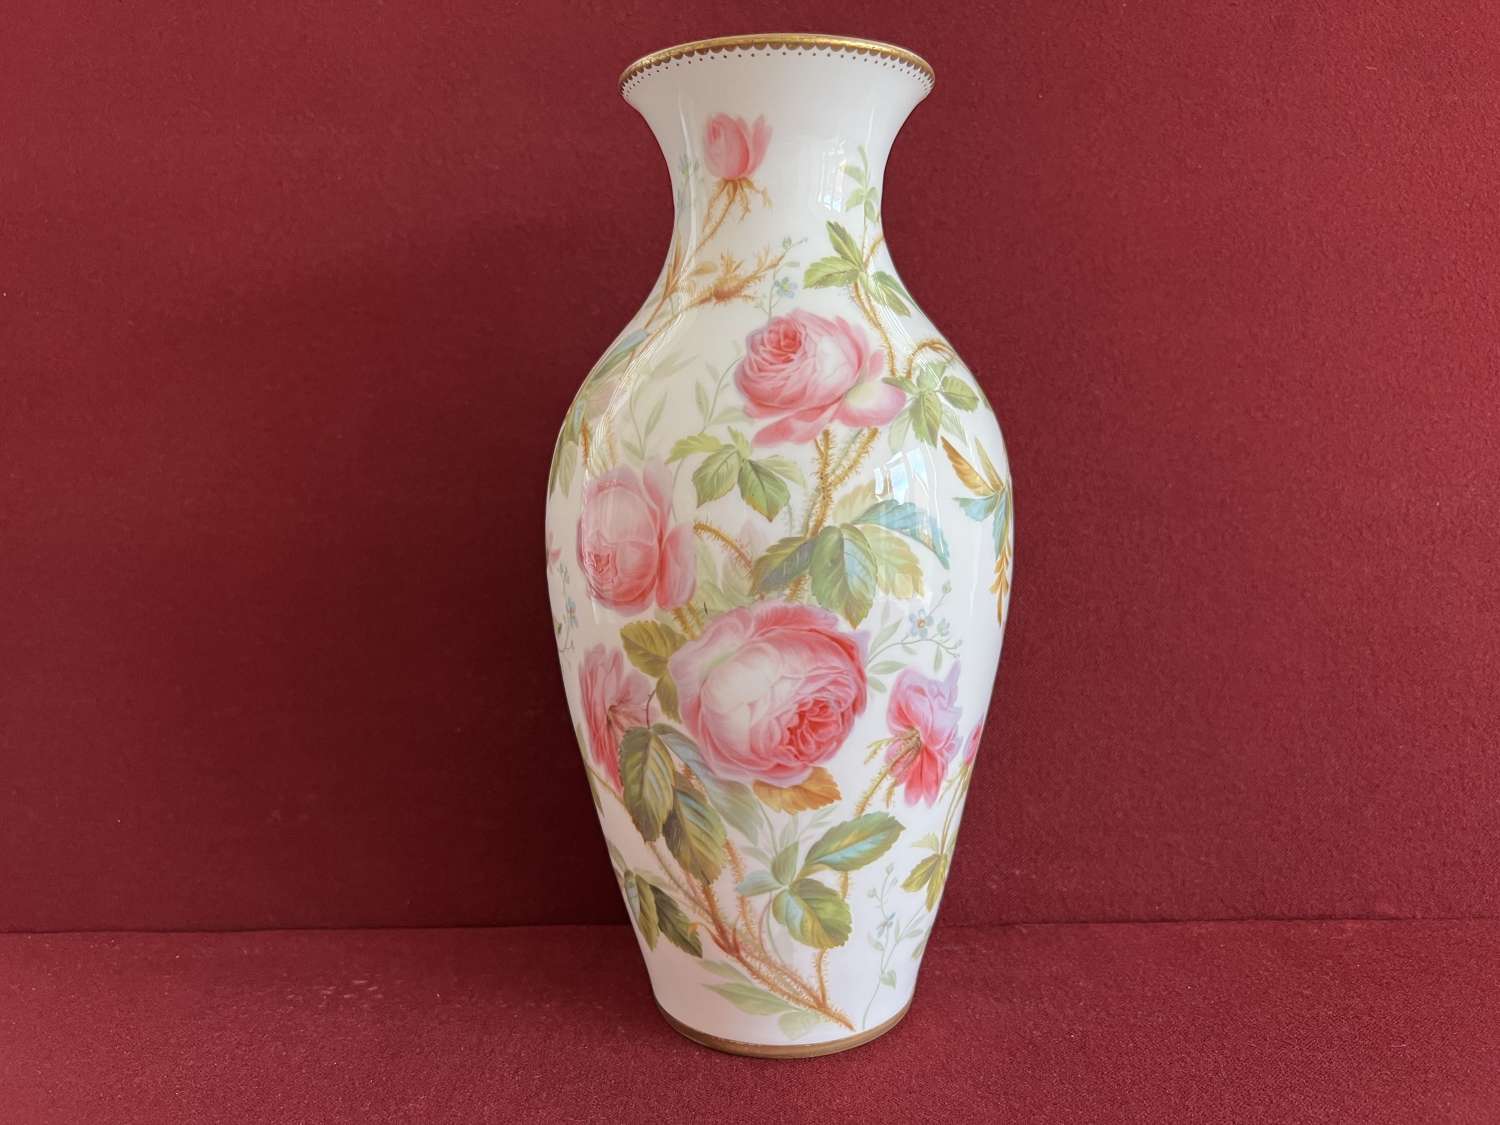 A Minton bone china vase decorated by Jessie Smith c.1850